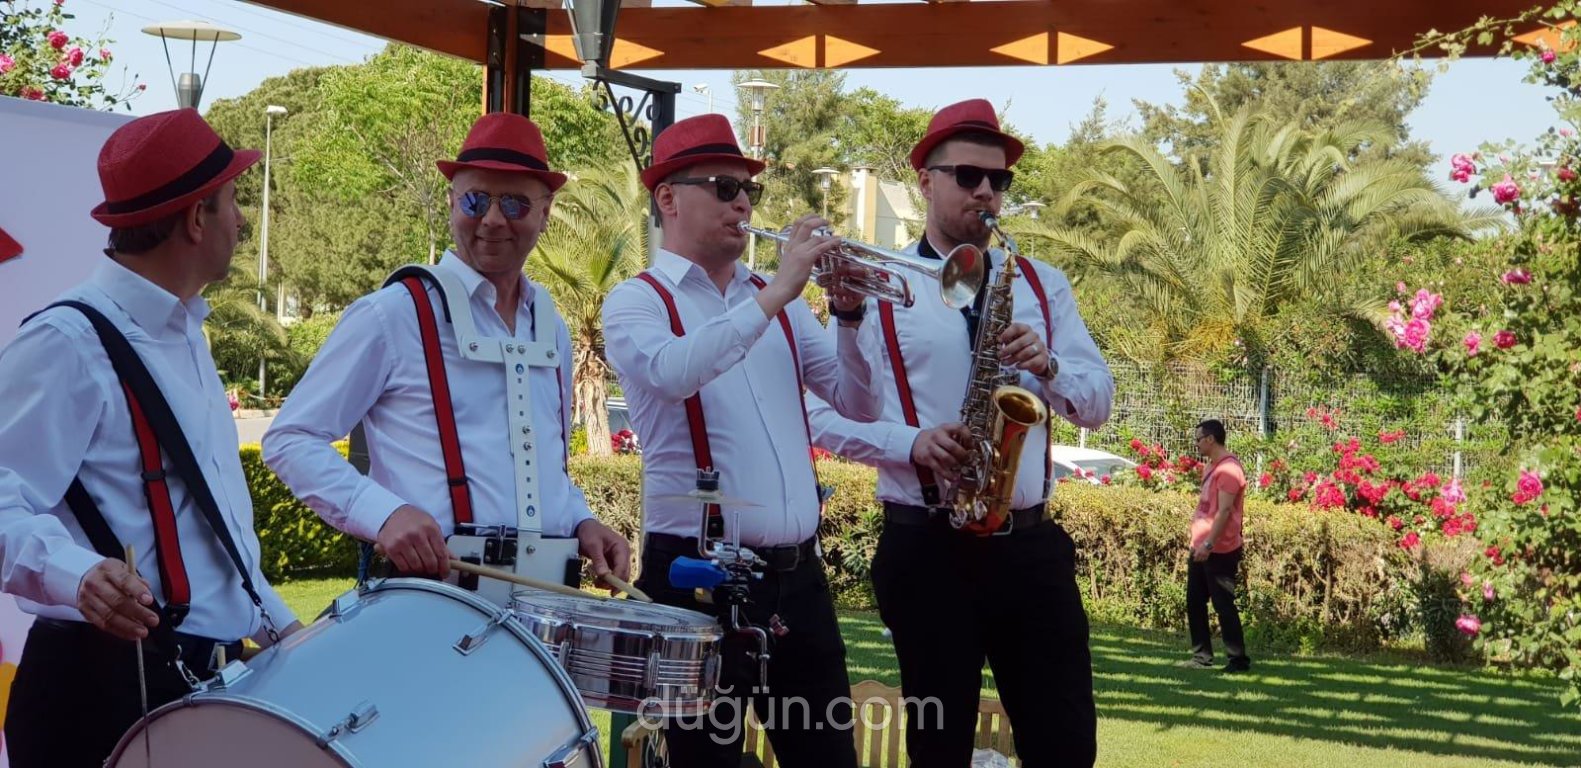 Rumeli Brass Band